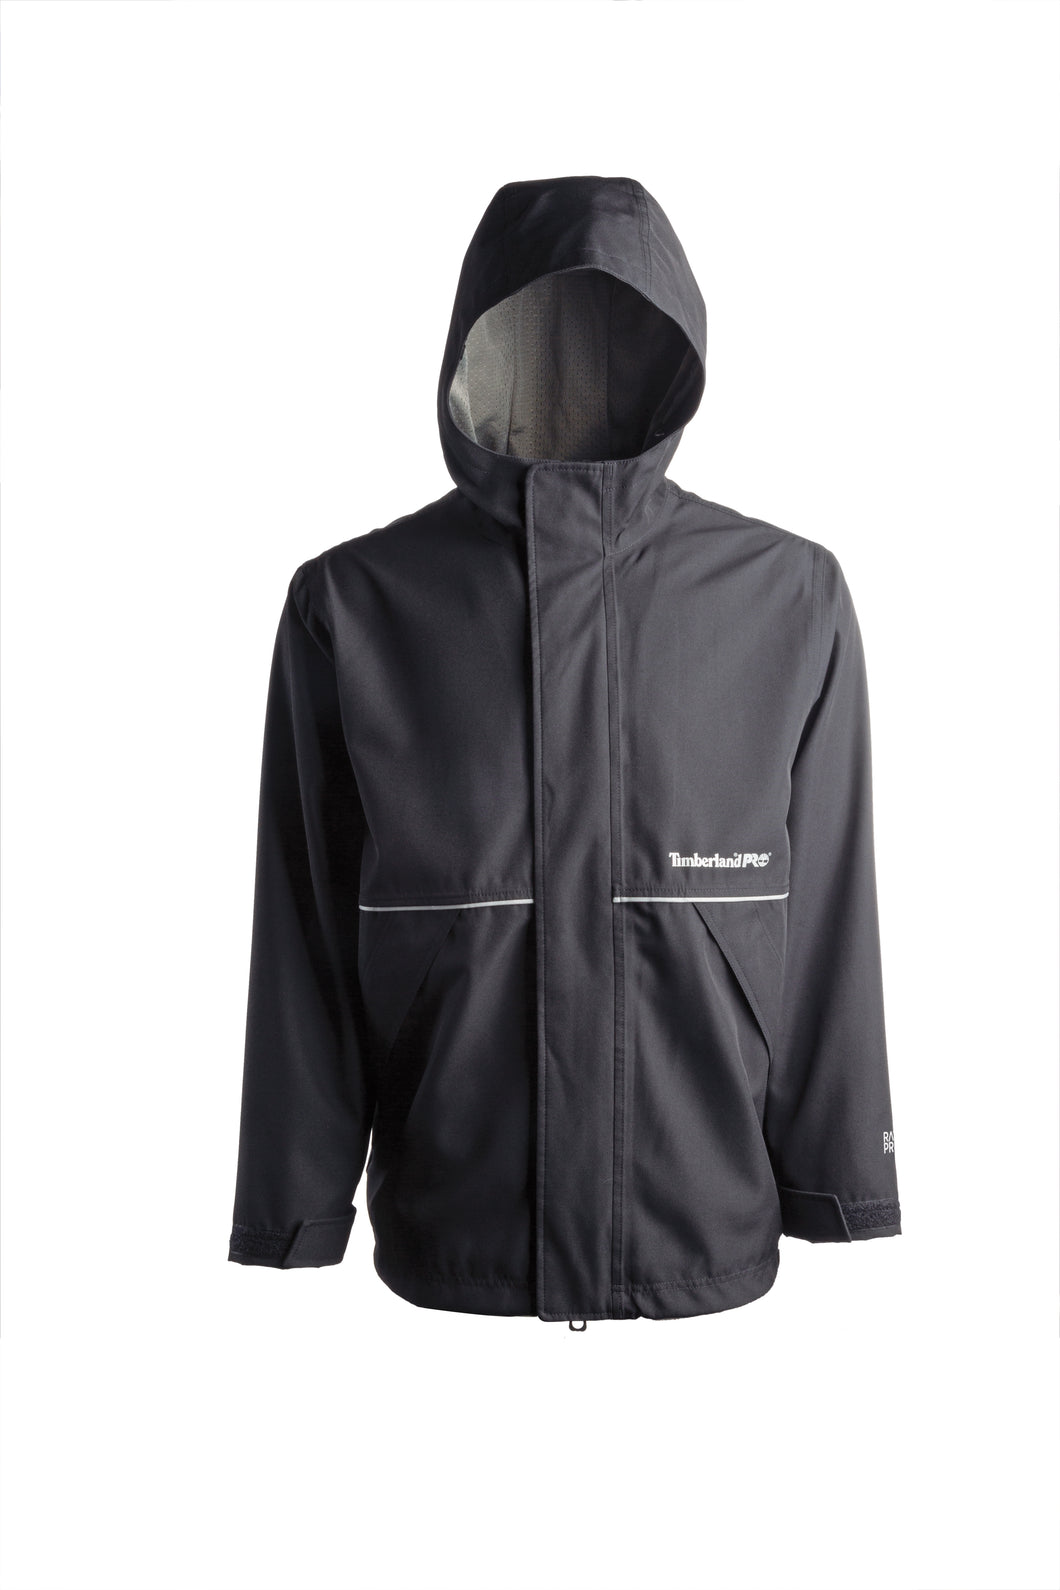 Men's Timberland PRO® Fit-To-Be-Dried Waterproof Rain Jacket